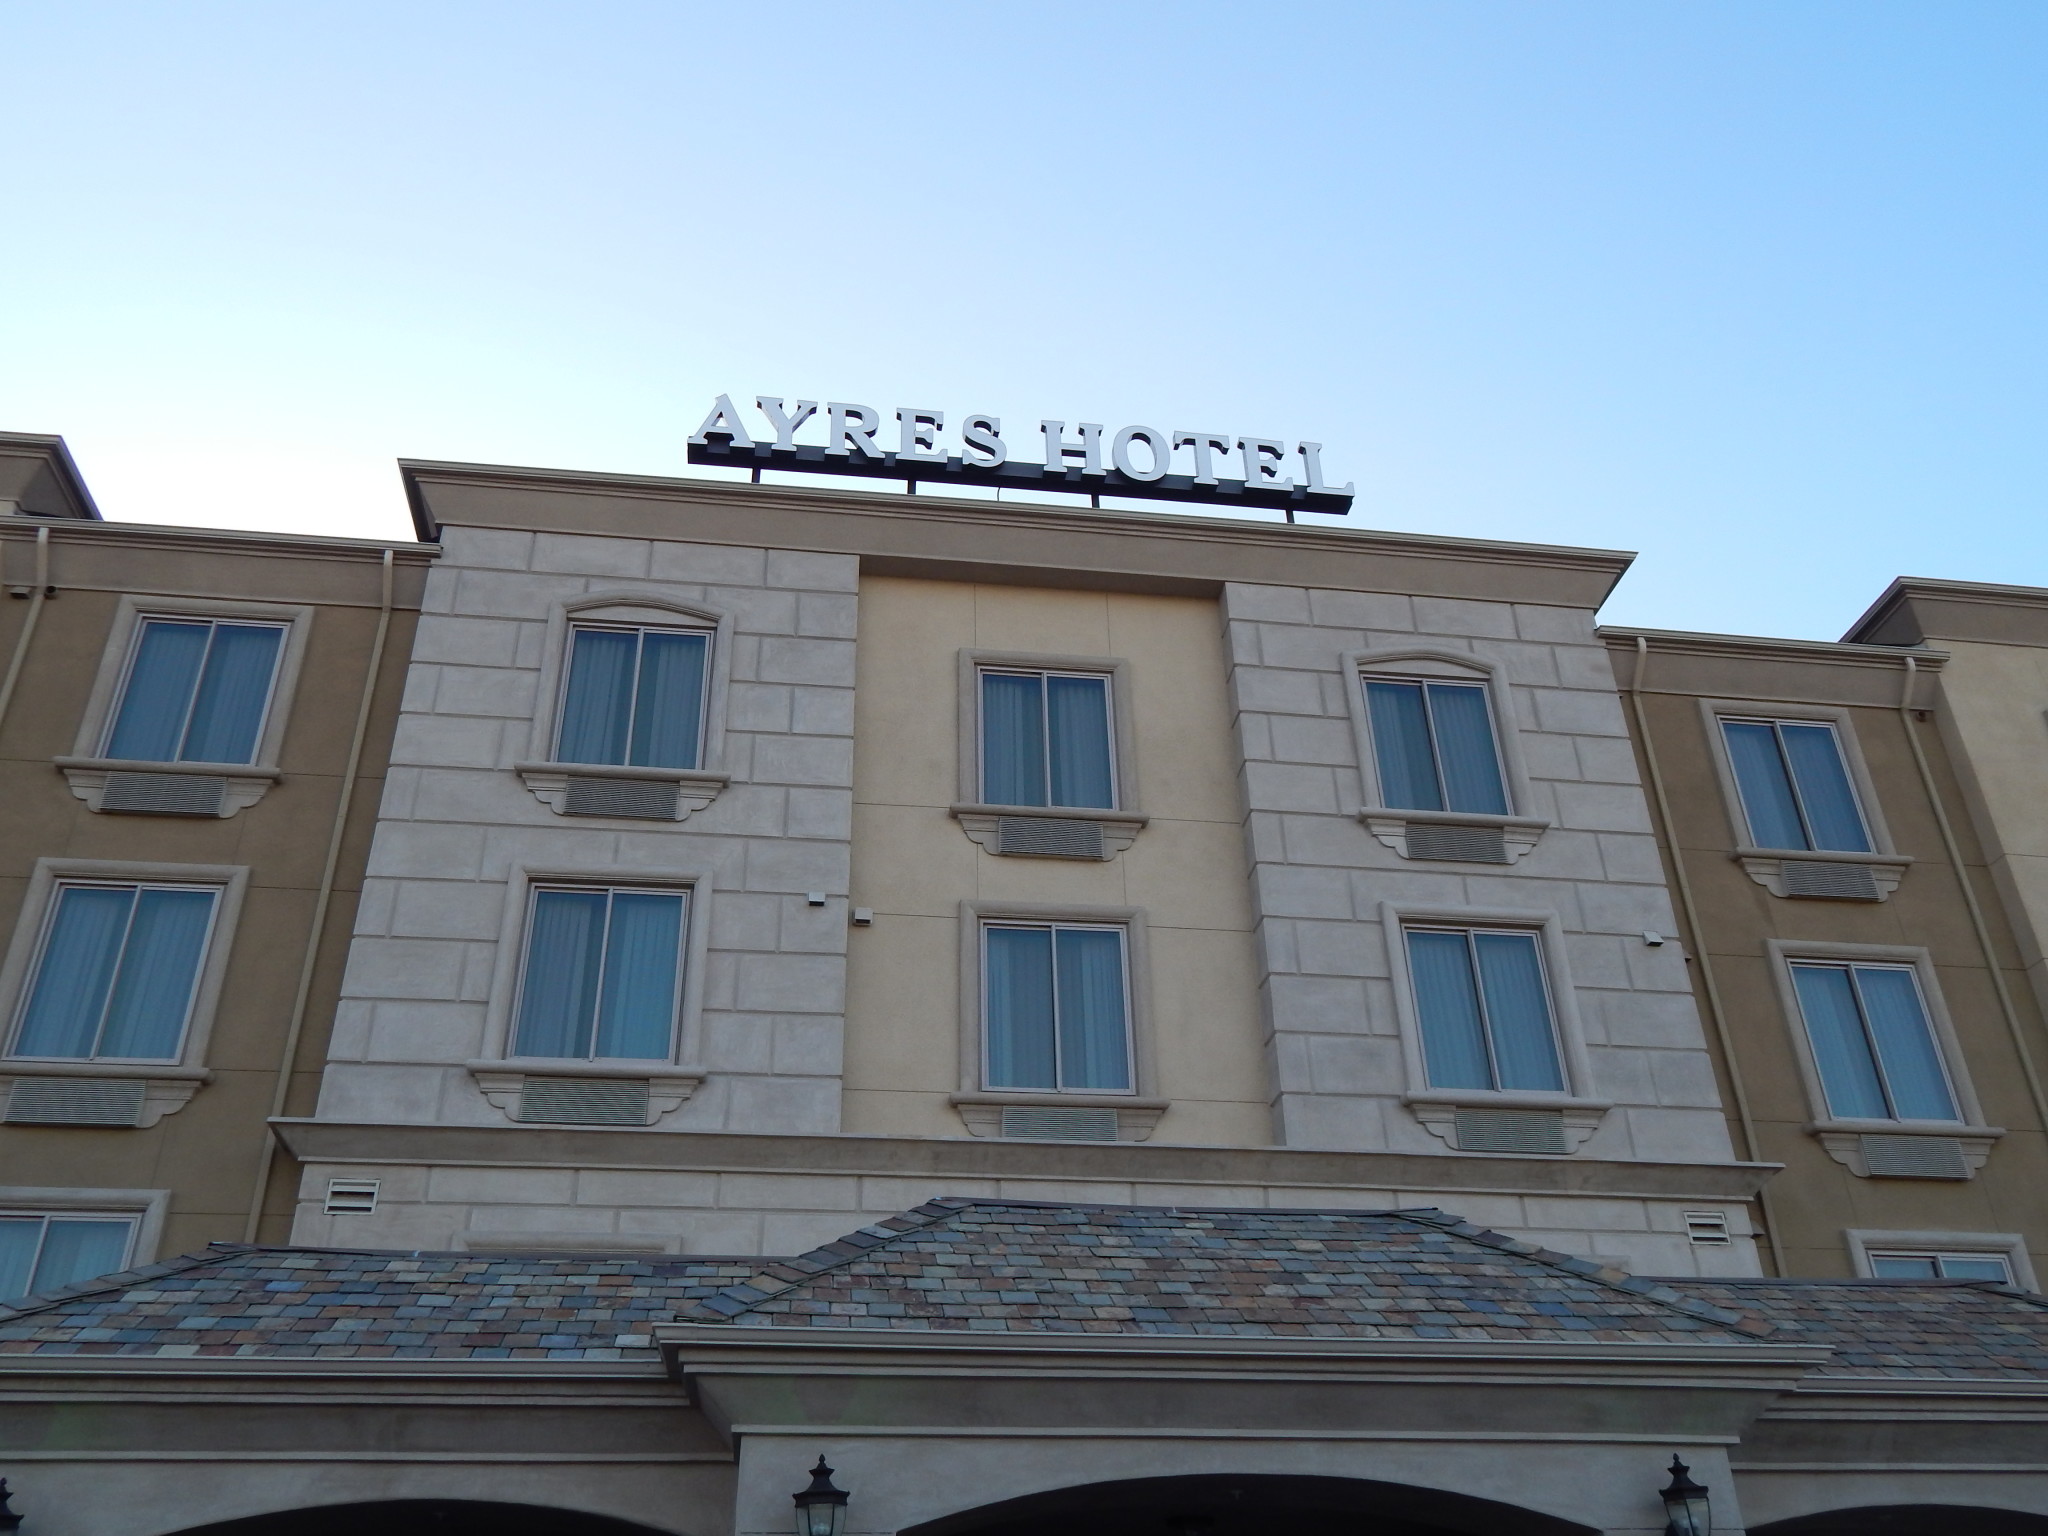 New Ayers Hotel near Disneyland Resort